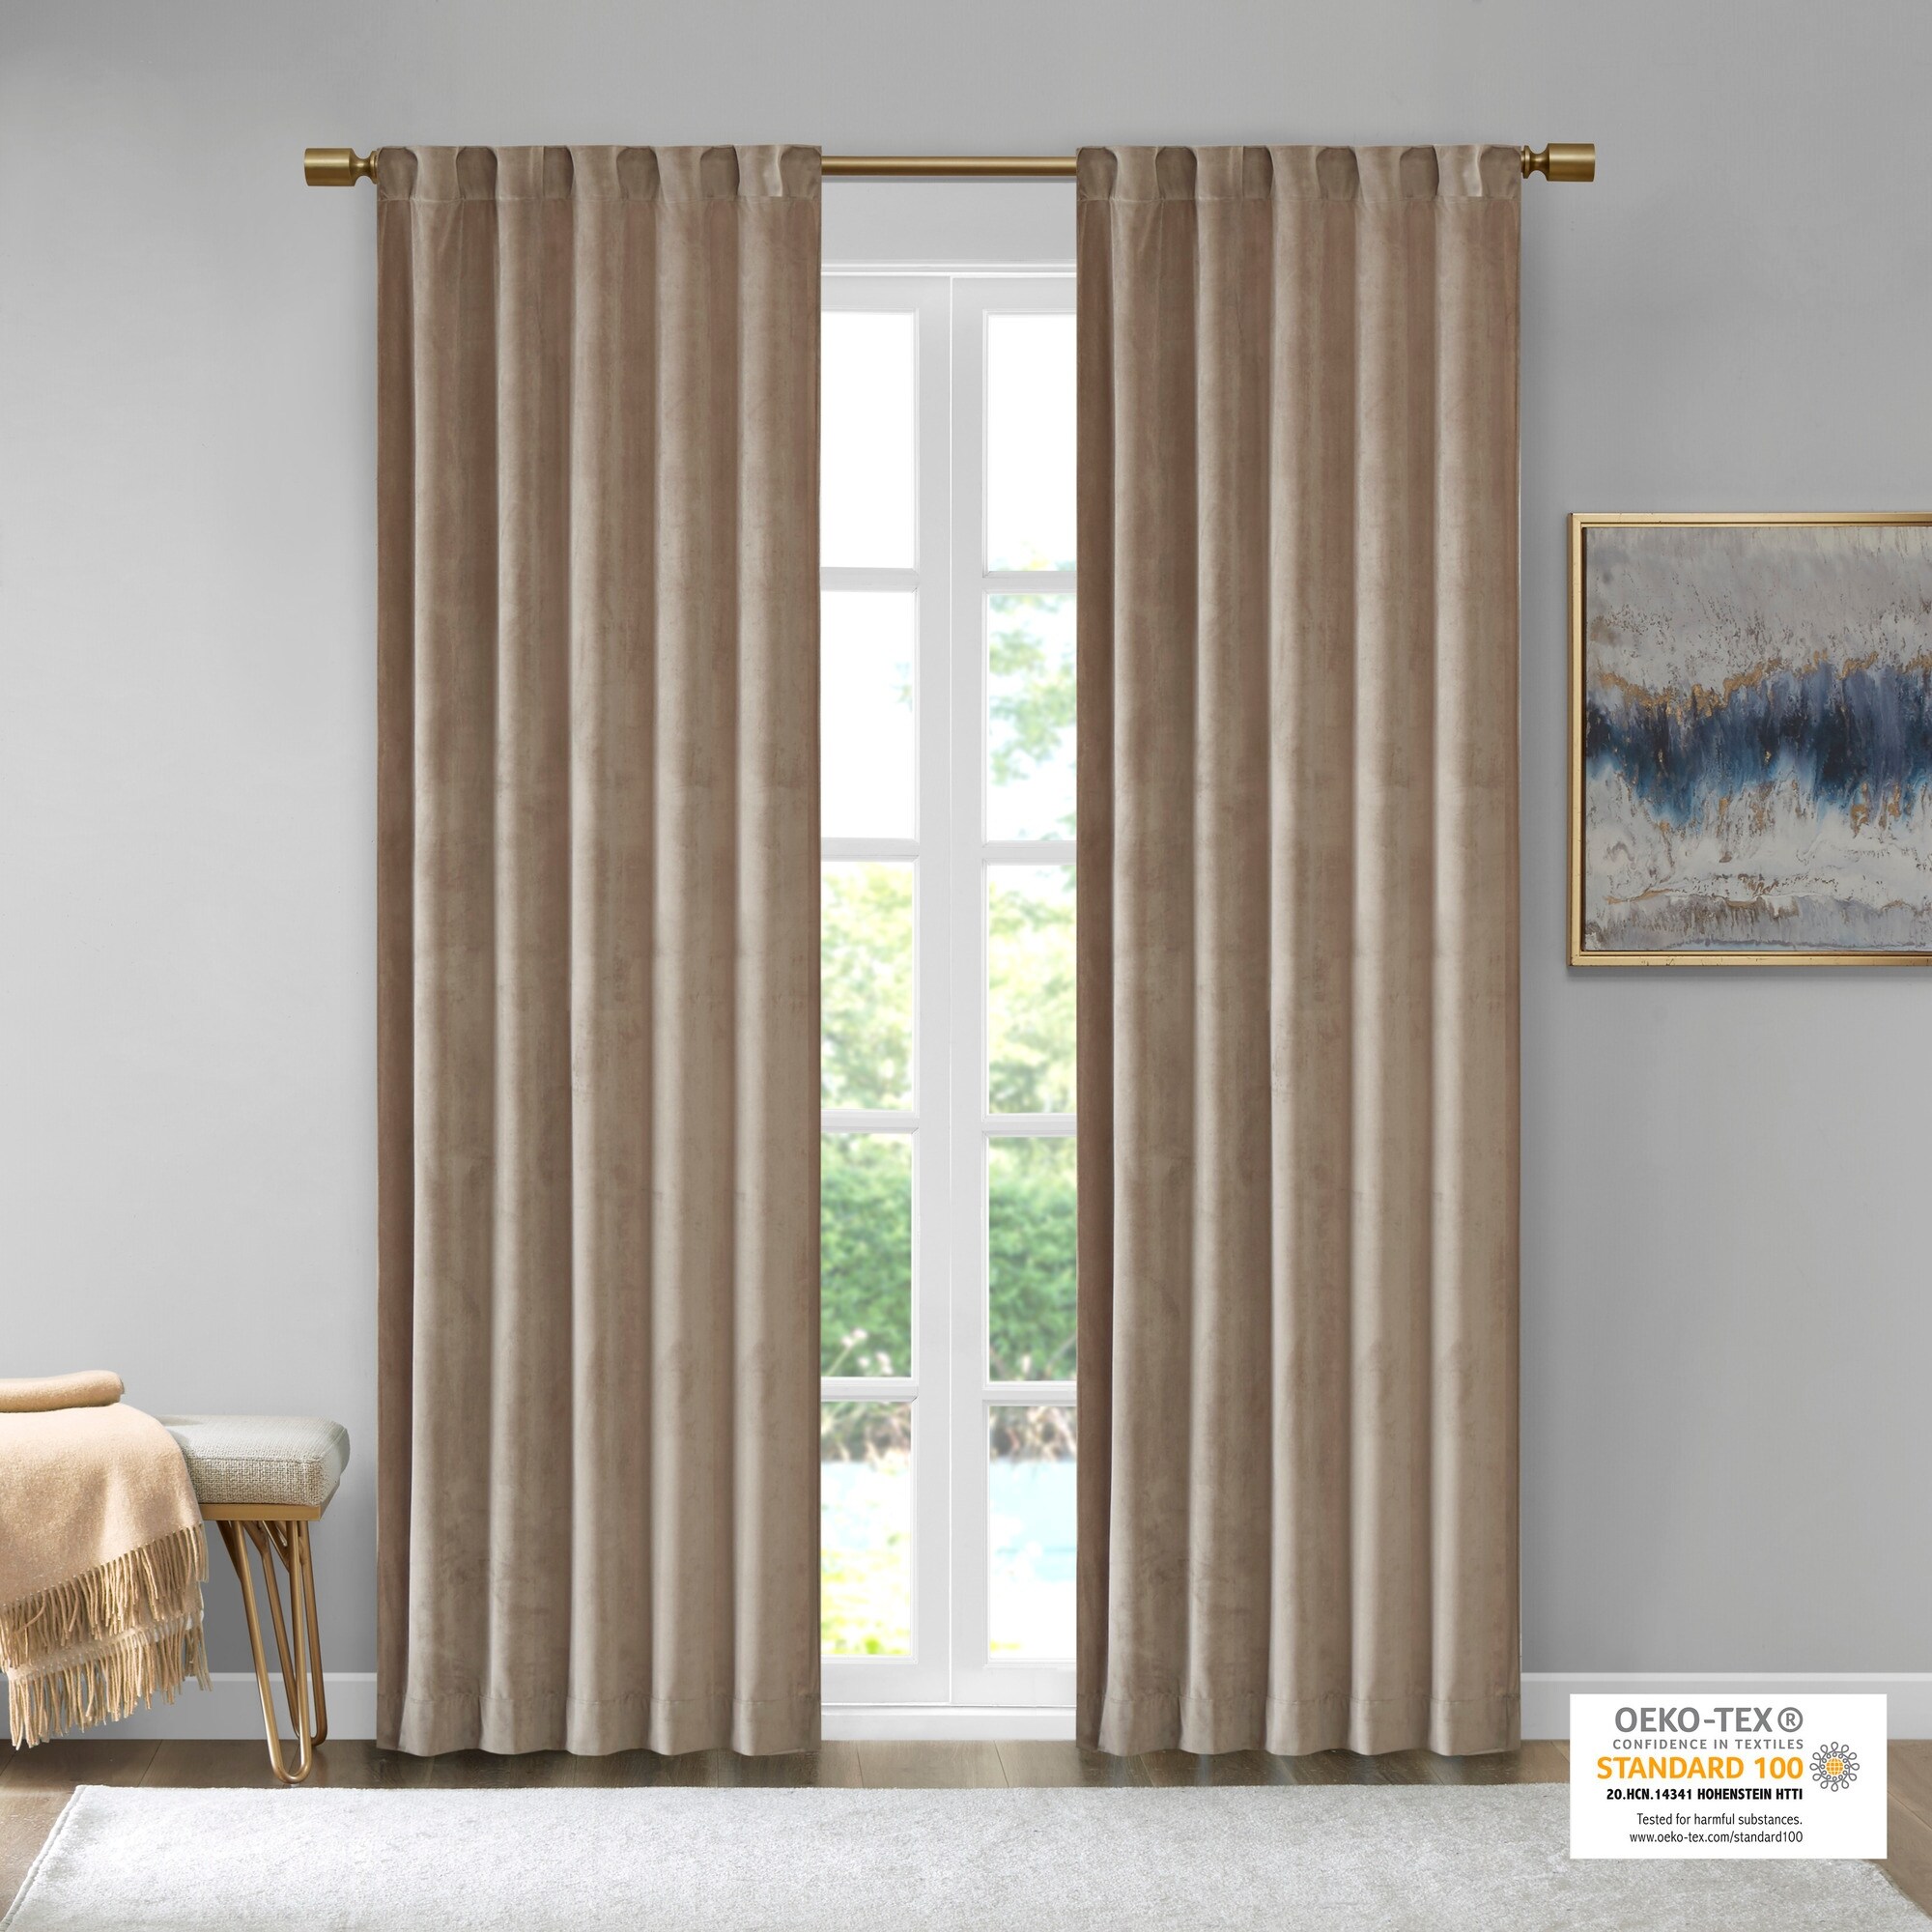 PAIR 140cm x 230cm Plain Brown ZERO chemical coating Room Darkening Curtains